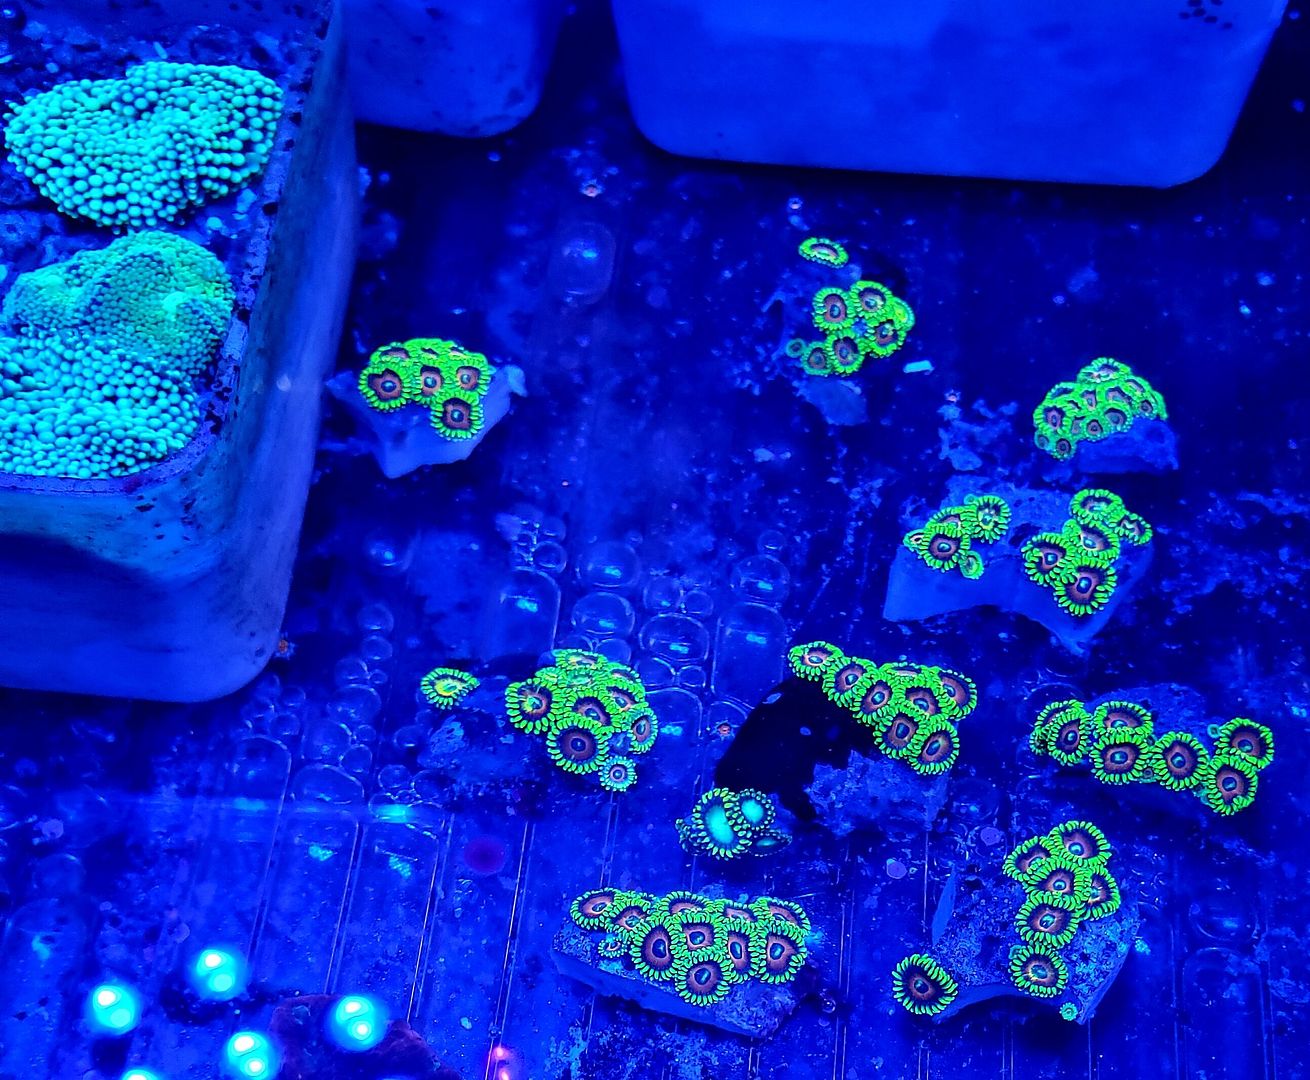 aGzNgXOS zpsmcoablof - Tons Of Great Corals In @ Tropicorium!!!